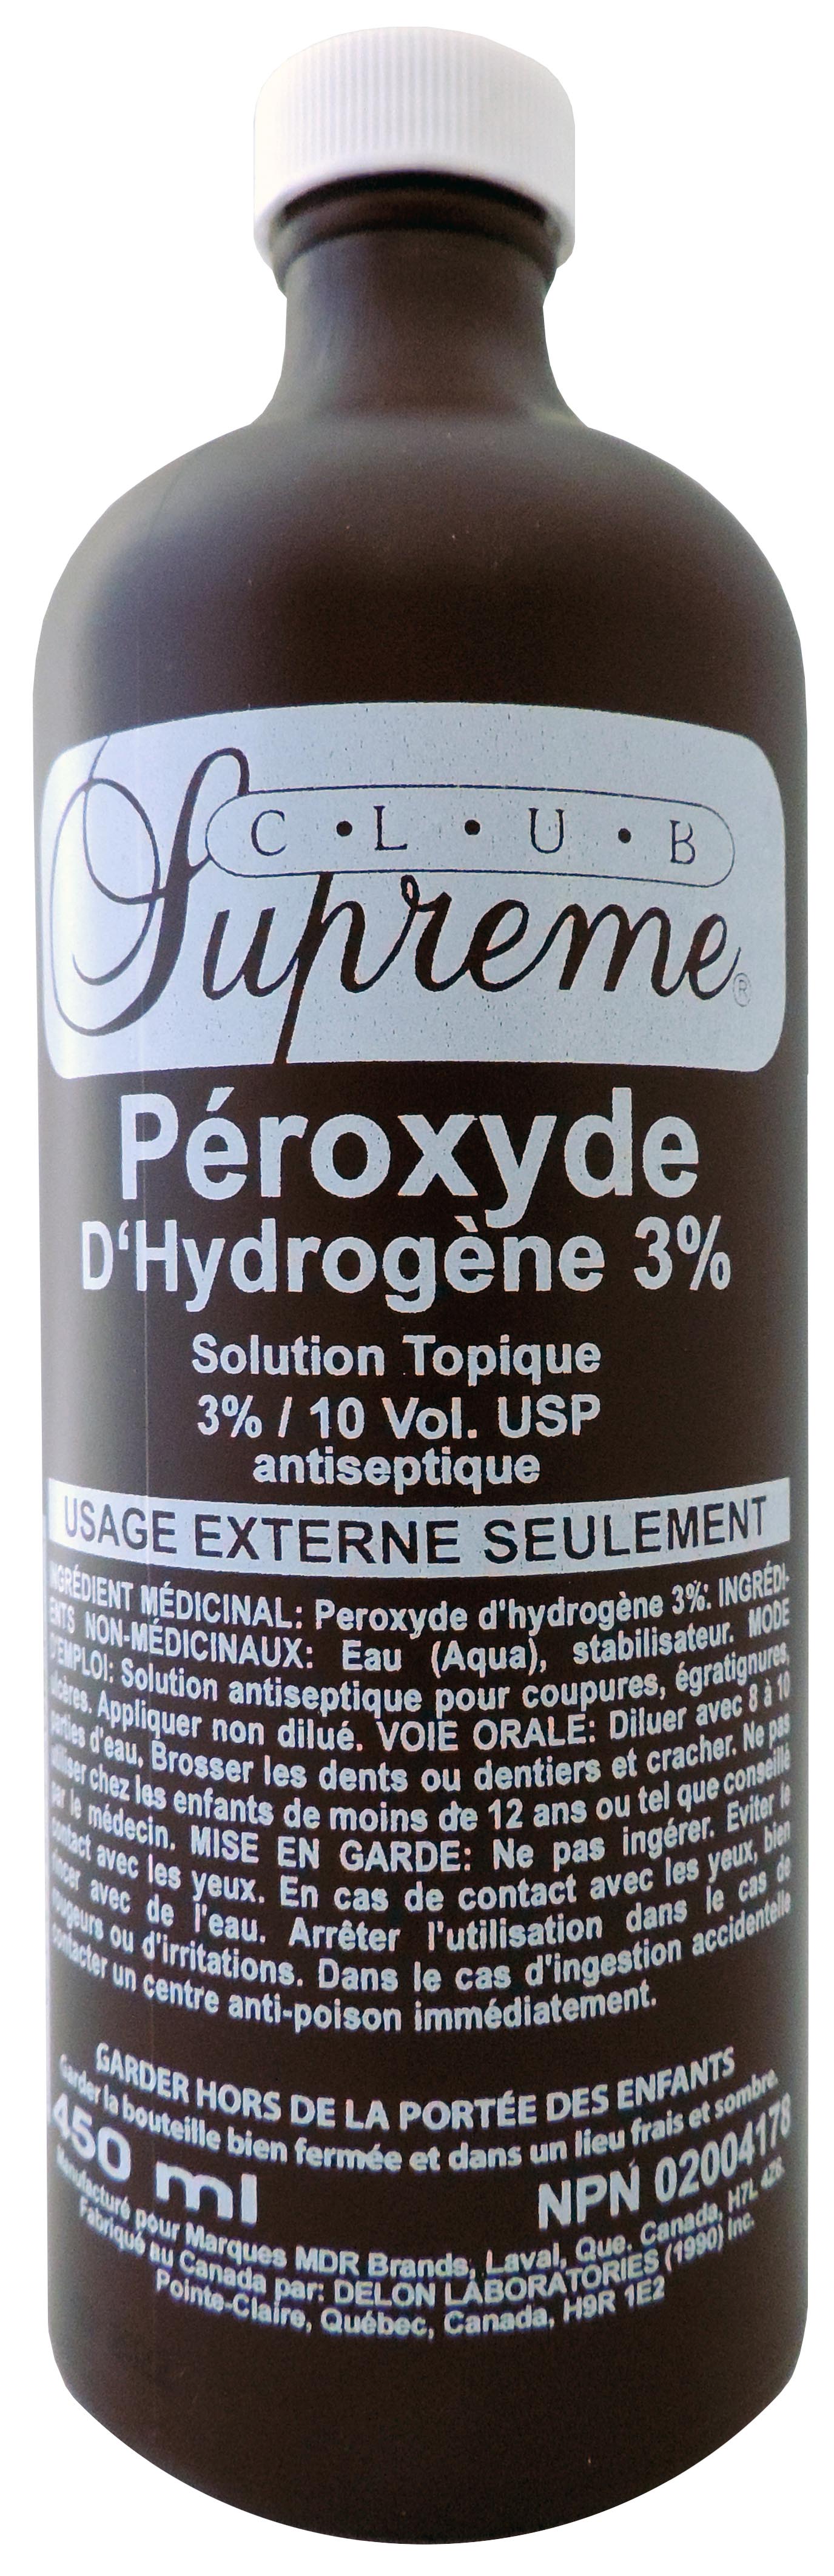 Cyprinocur eau oxygénée 3% (Peroxyde d'hydrogène) 1000ml